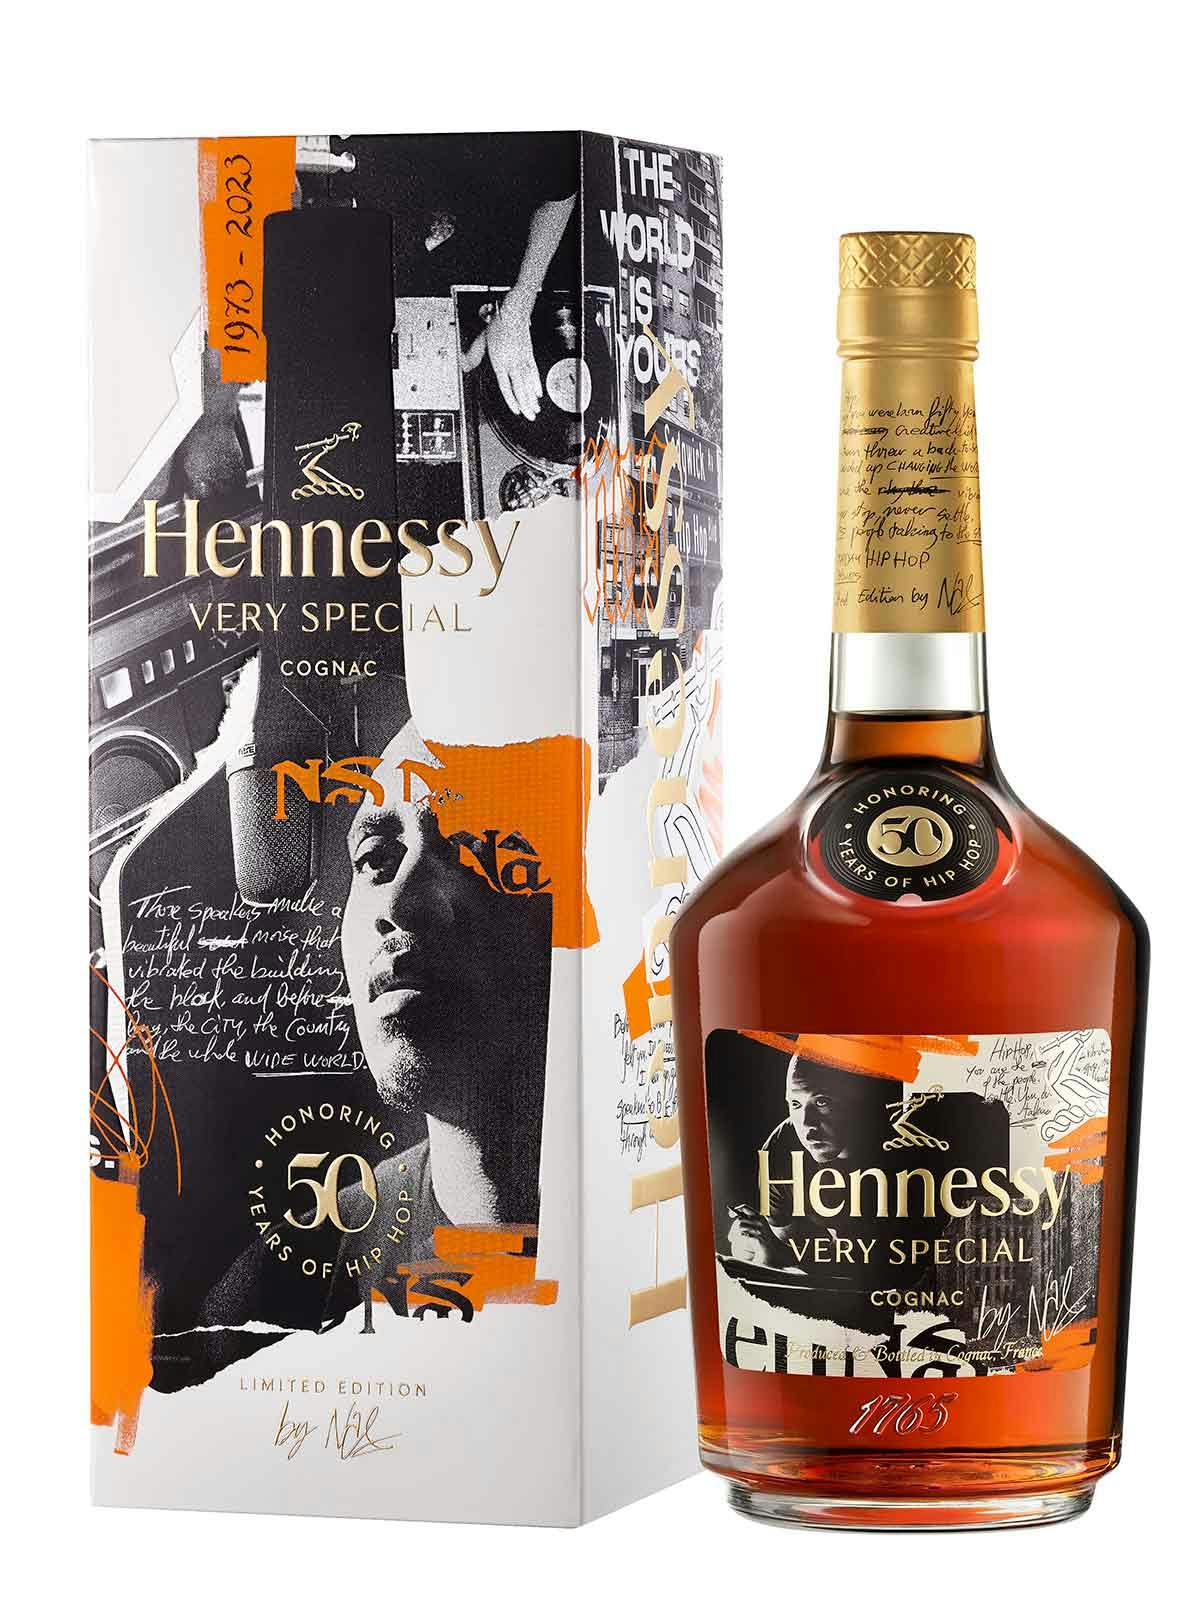 Hennessy Cognac XO Kim Jones Limited Edition – Wine Chateau